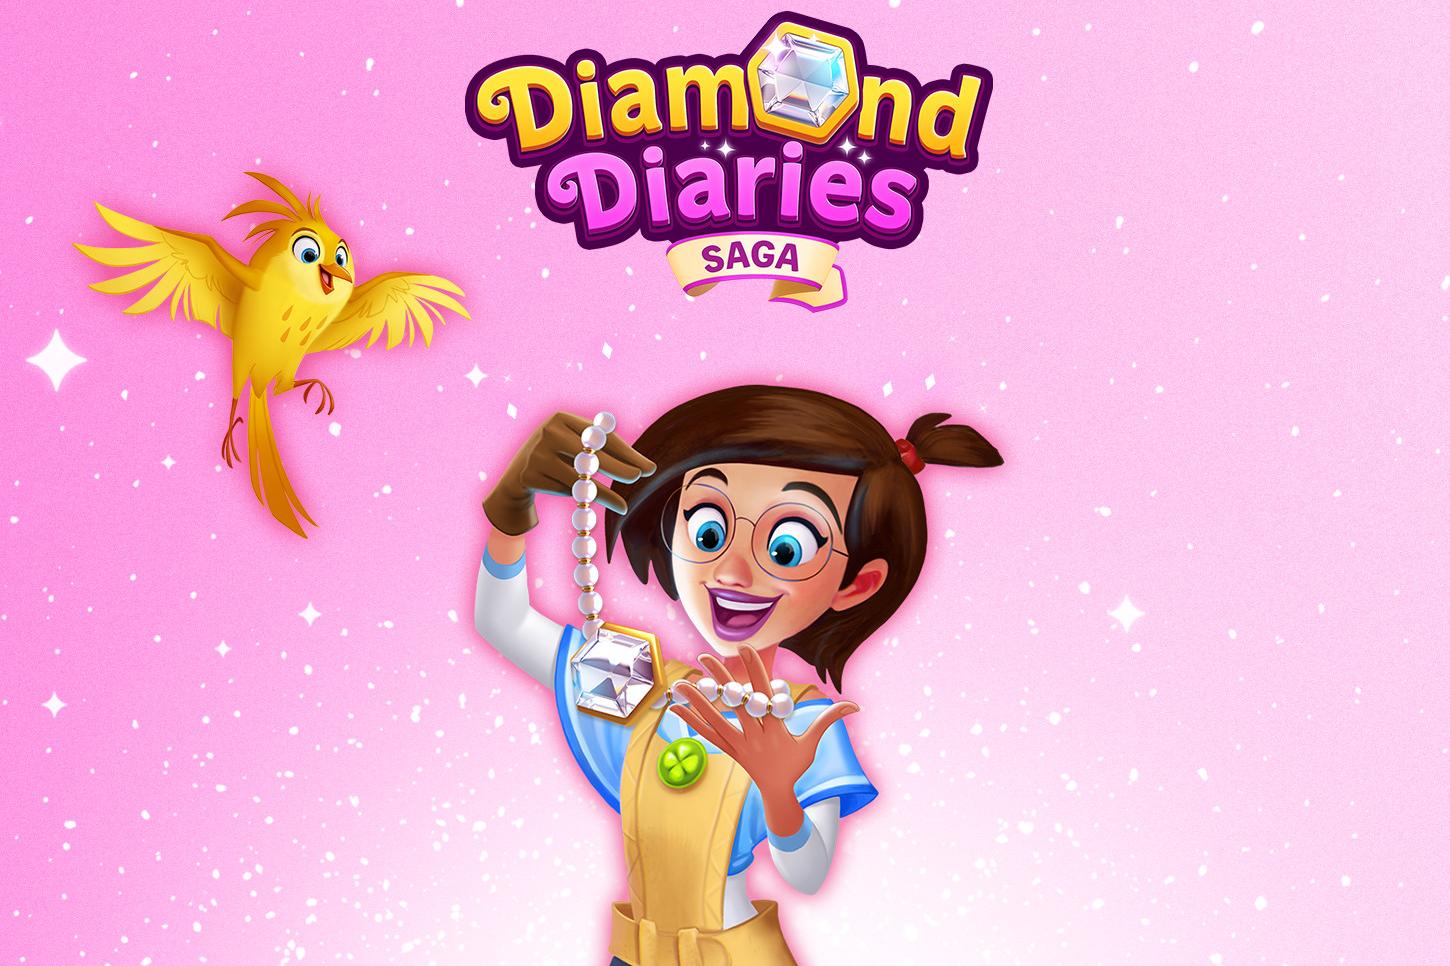 UI For King's mobile game: Diamond Diaries Saga